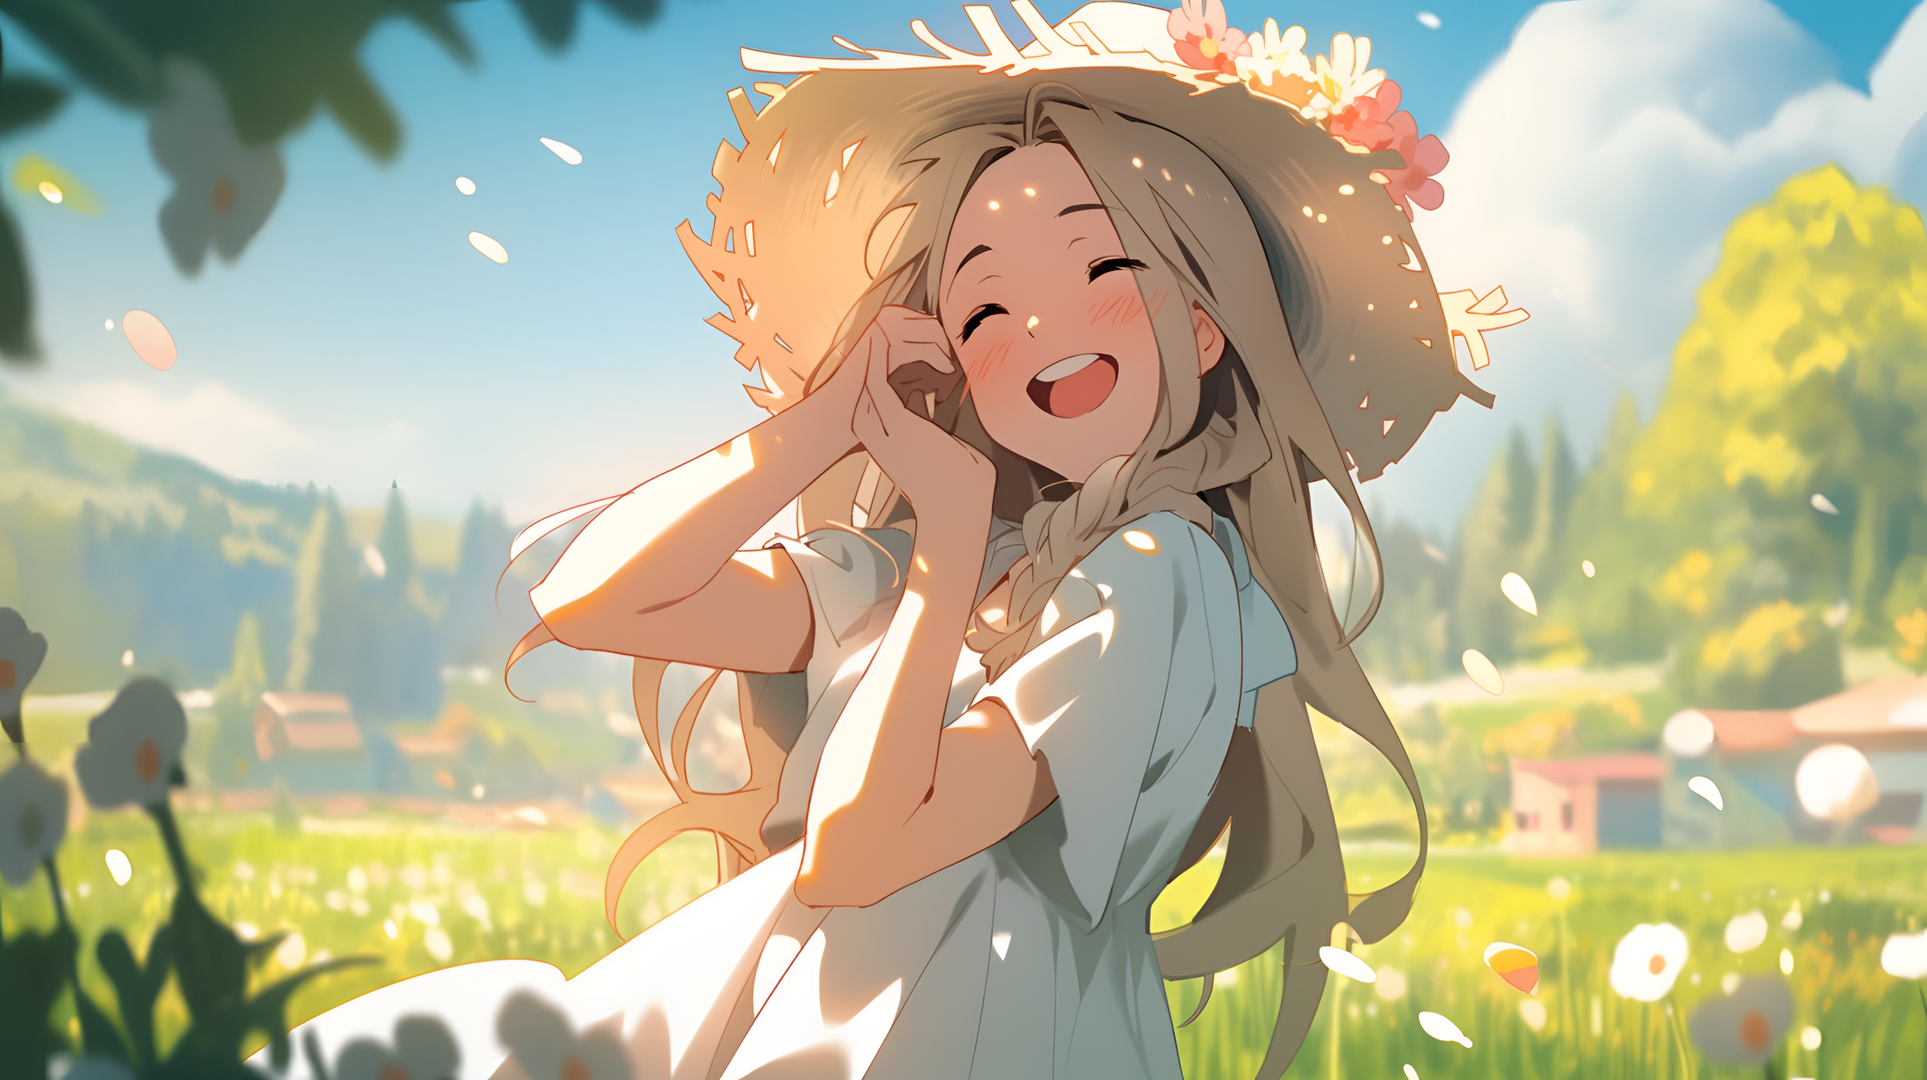 Nervous smiling anime girl by jadayking on DeviantArt